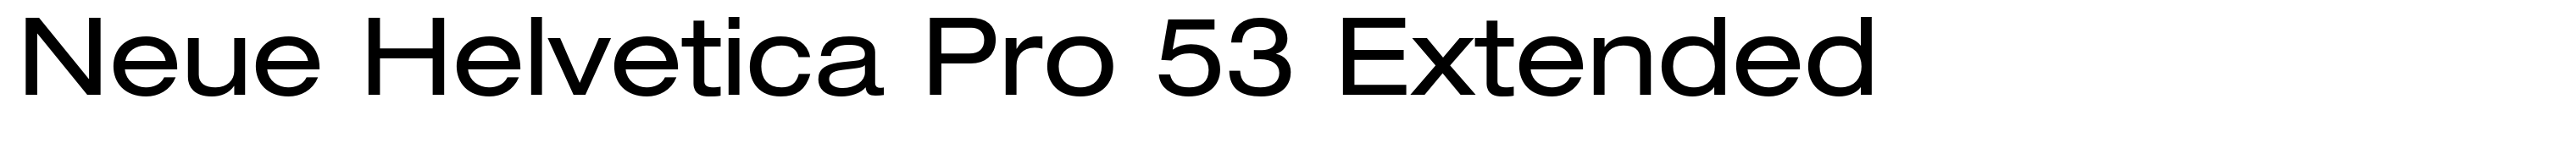 Neue Helvetica Pro 53 Extended